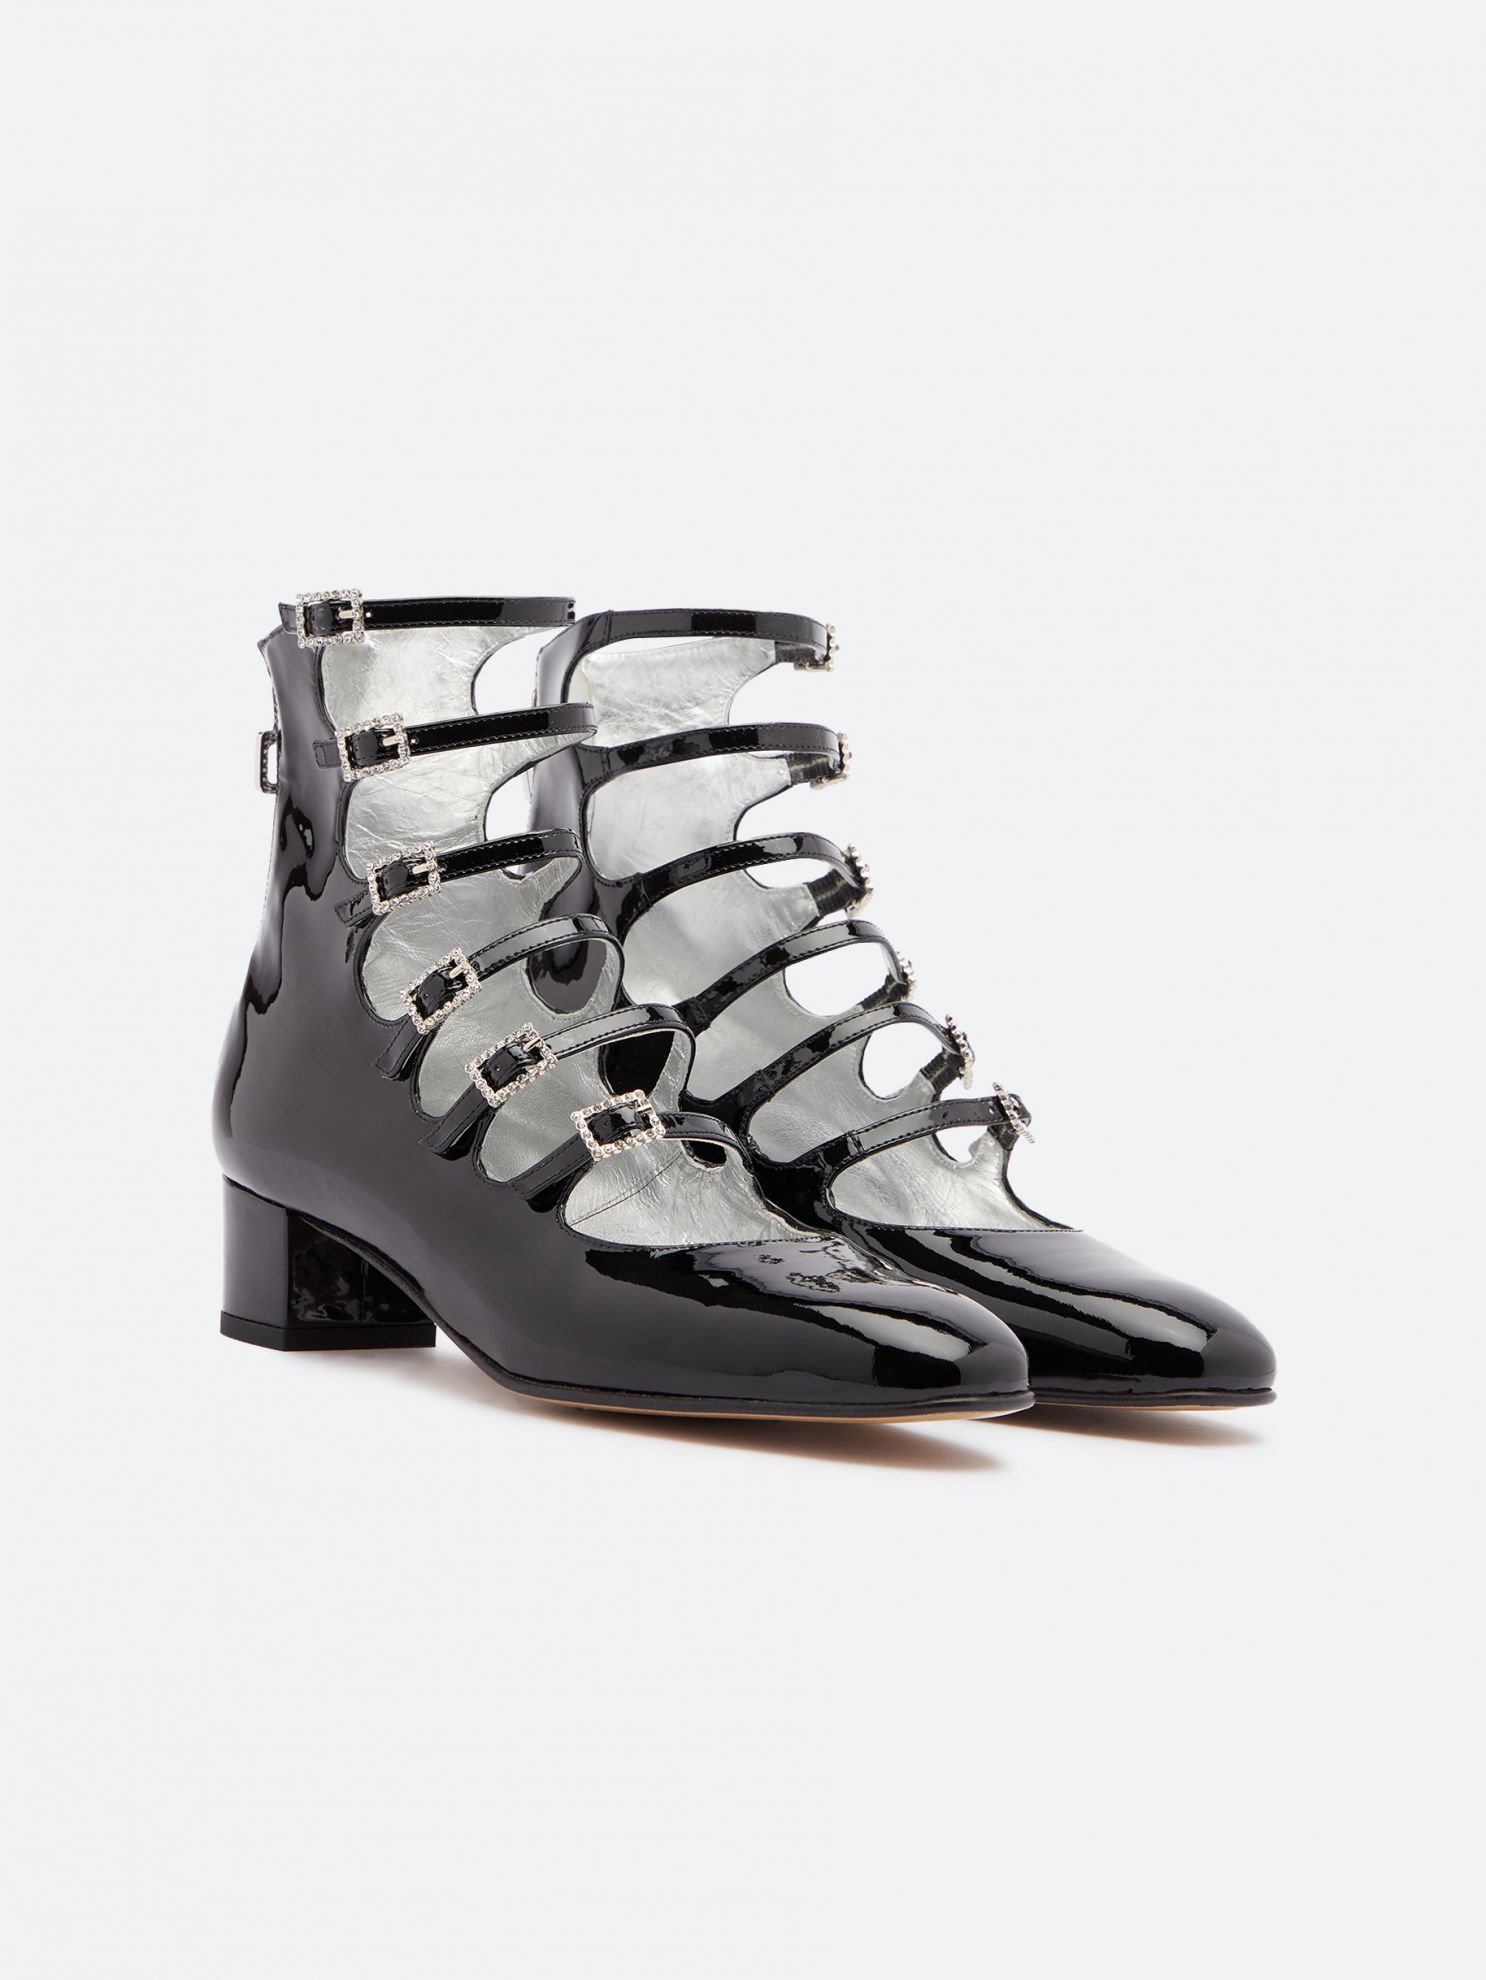 XENA Black patent leather multi-straps Mary Janes |Carel Paris Shoes